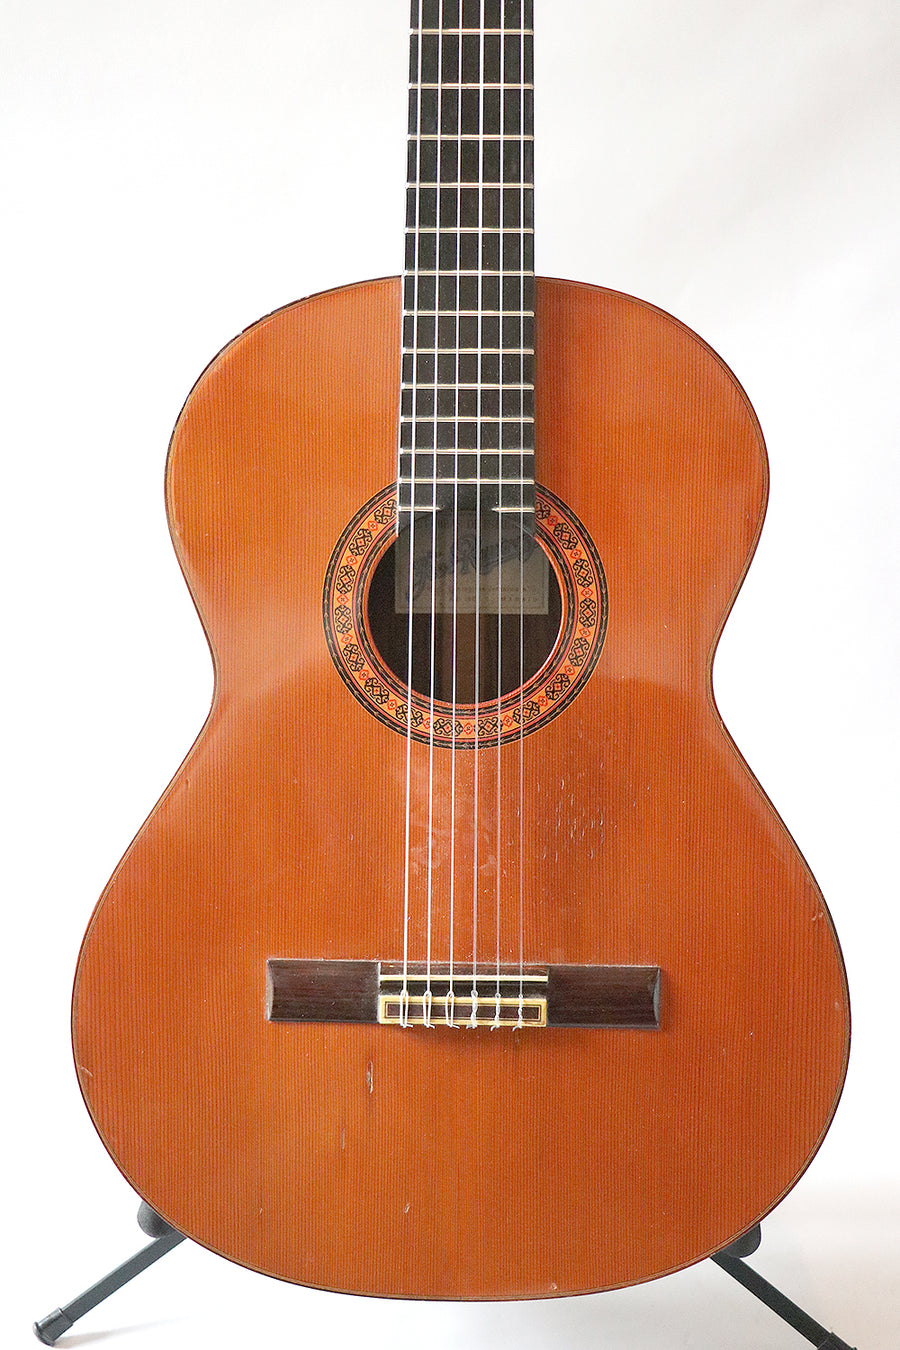 Jose Ramirez Guitarras de Estudio - 1983 Made in Spain